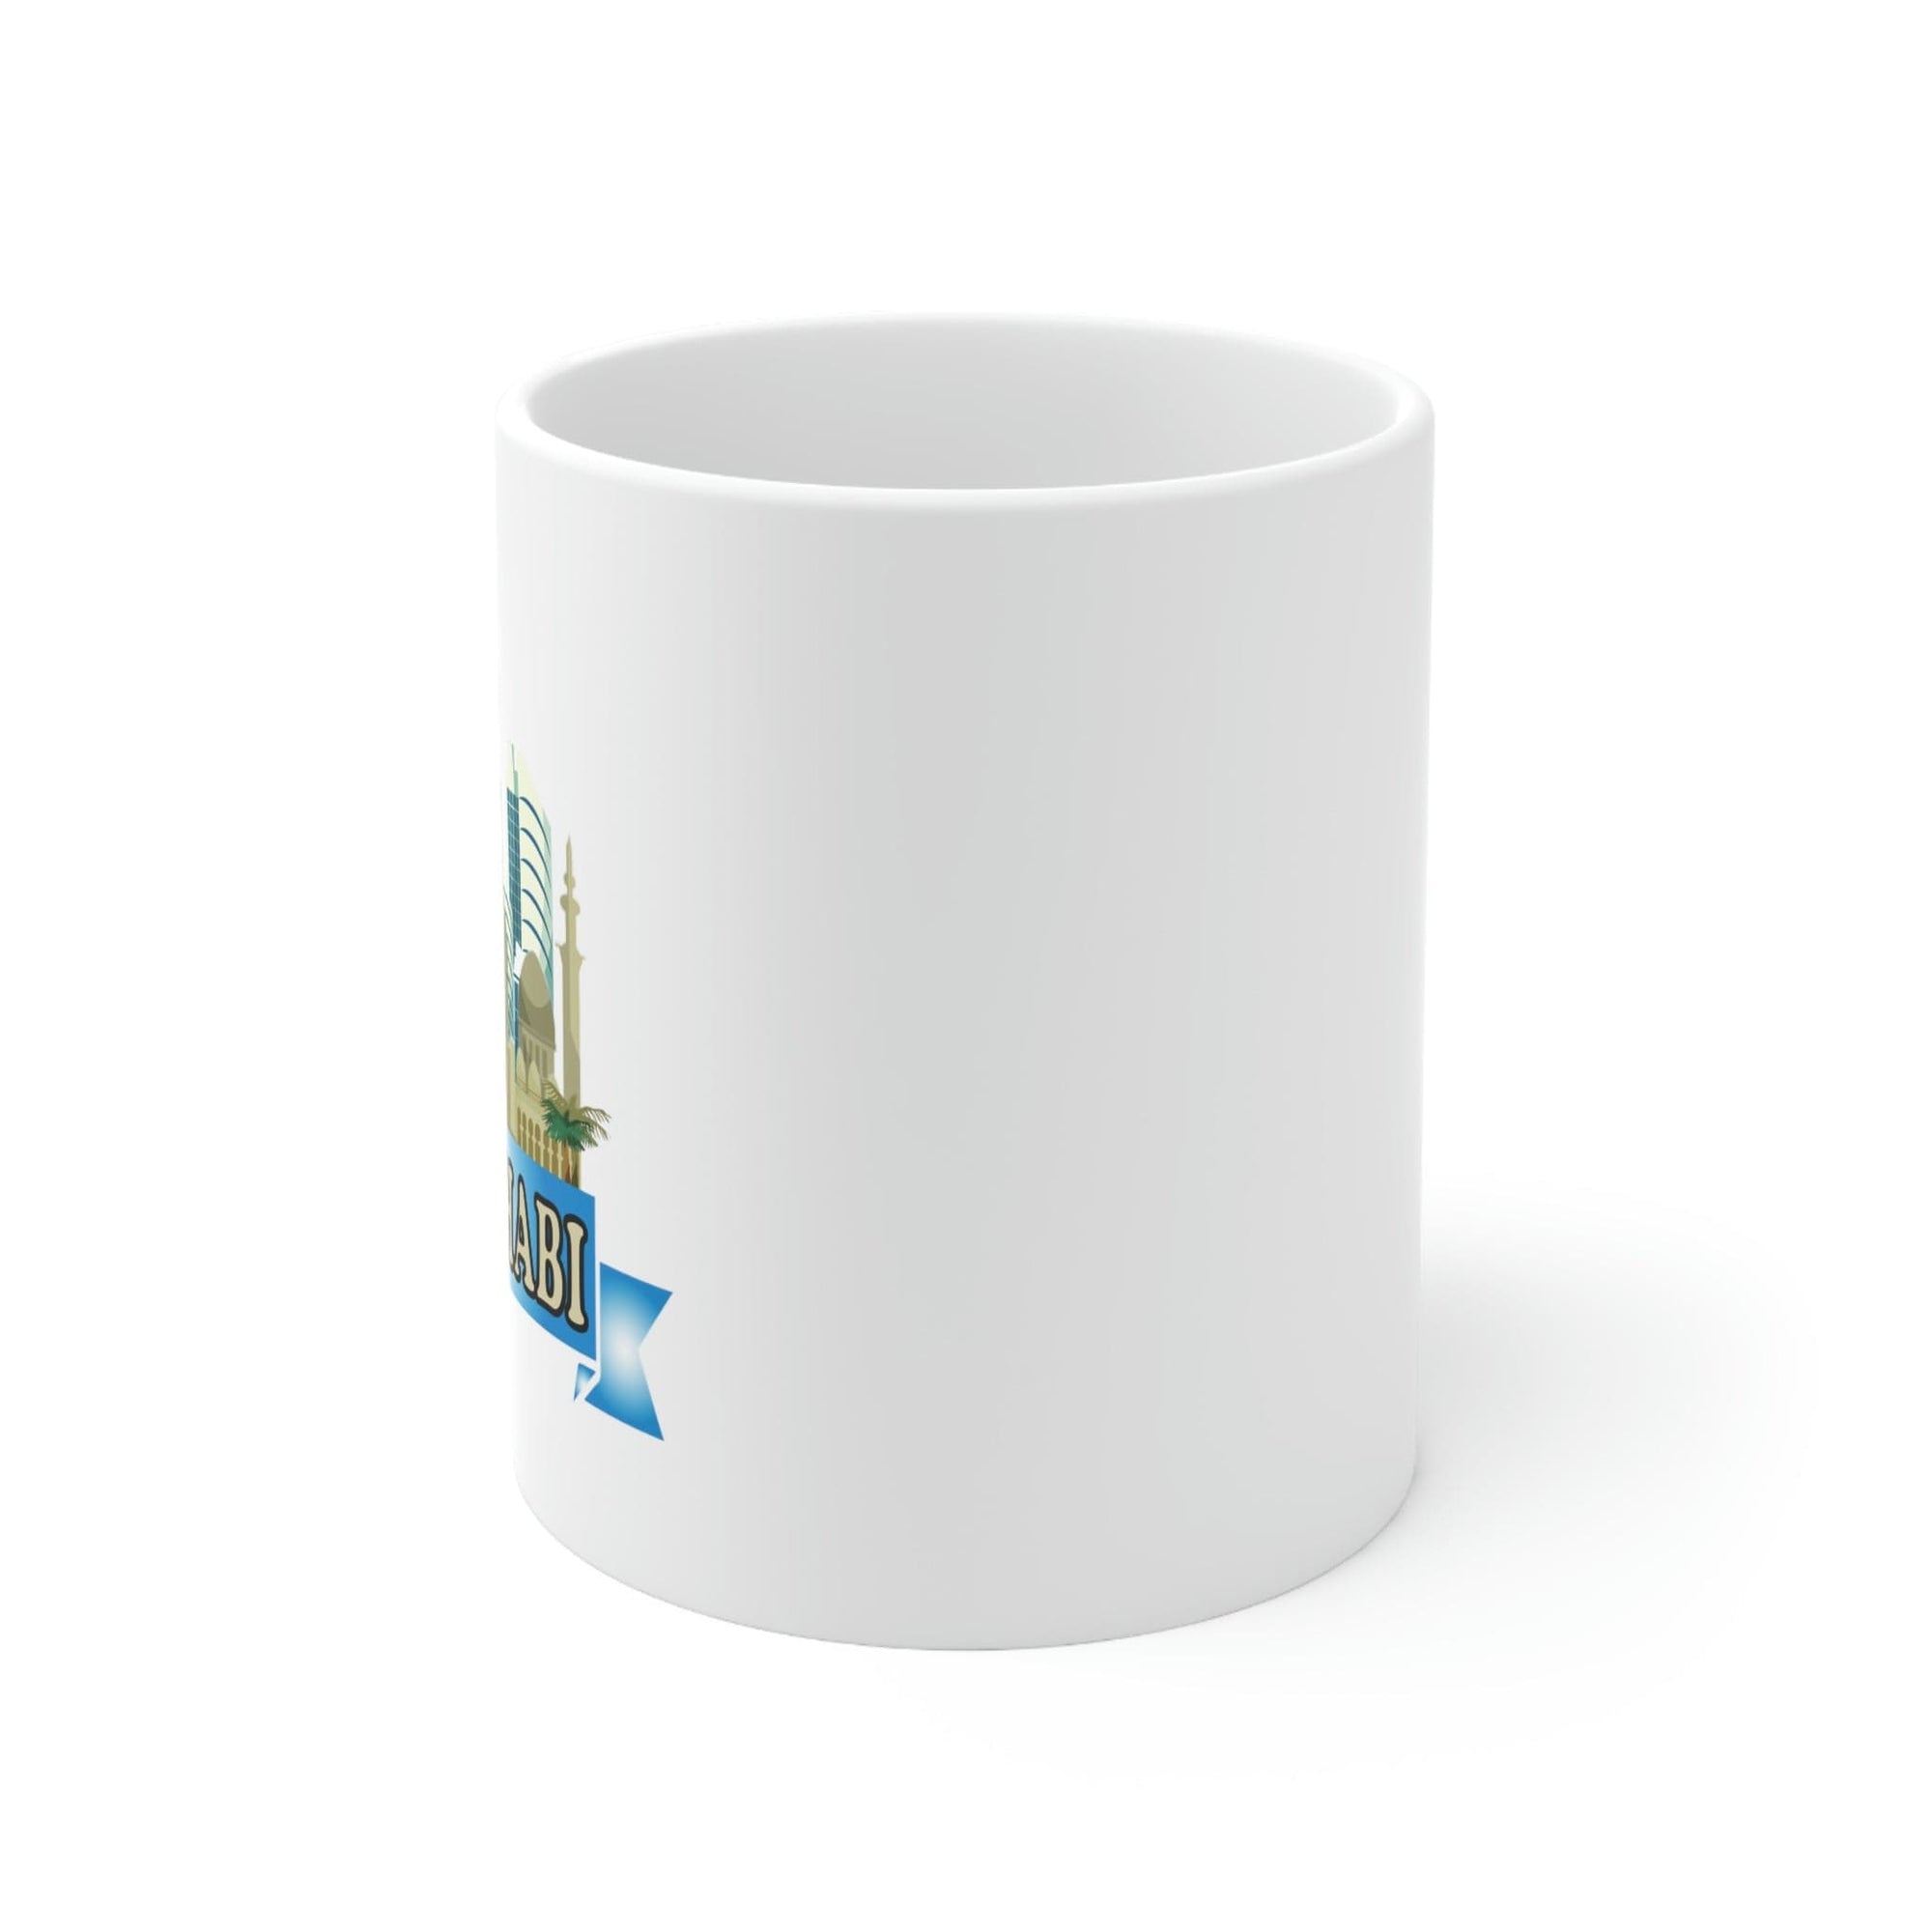 ABU DHABI - Awesome Ceramic Mug, Exclusive Design